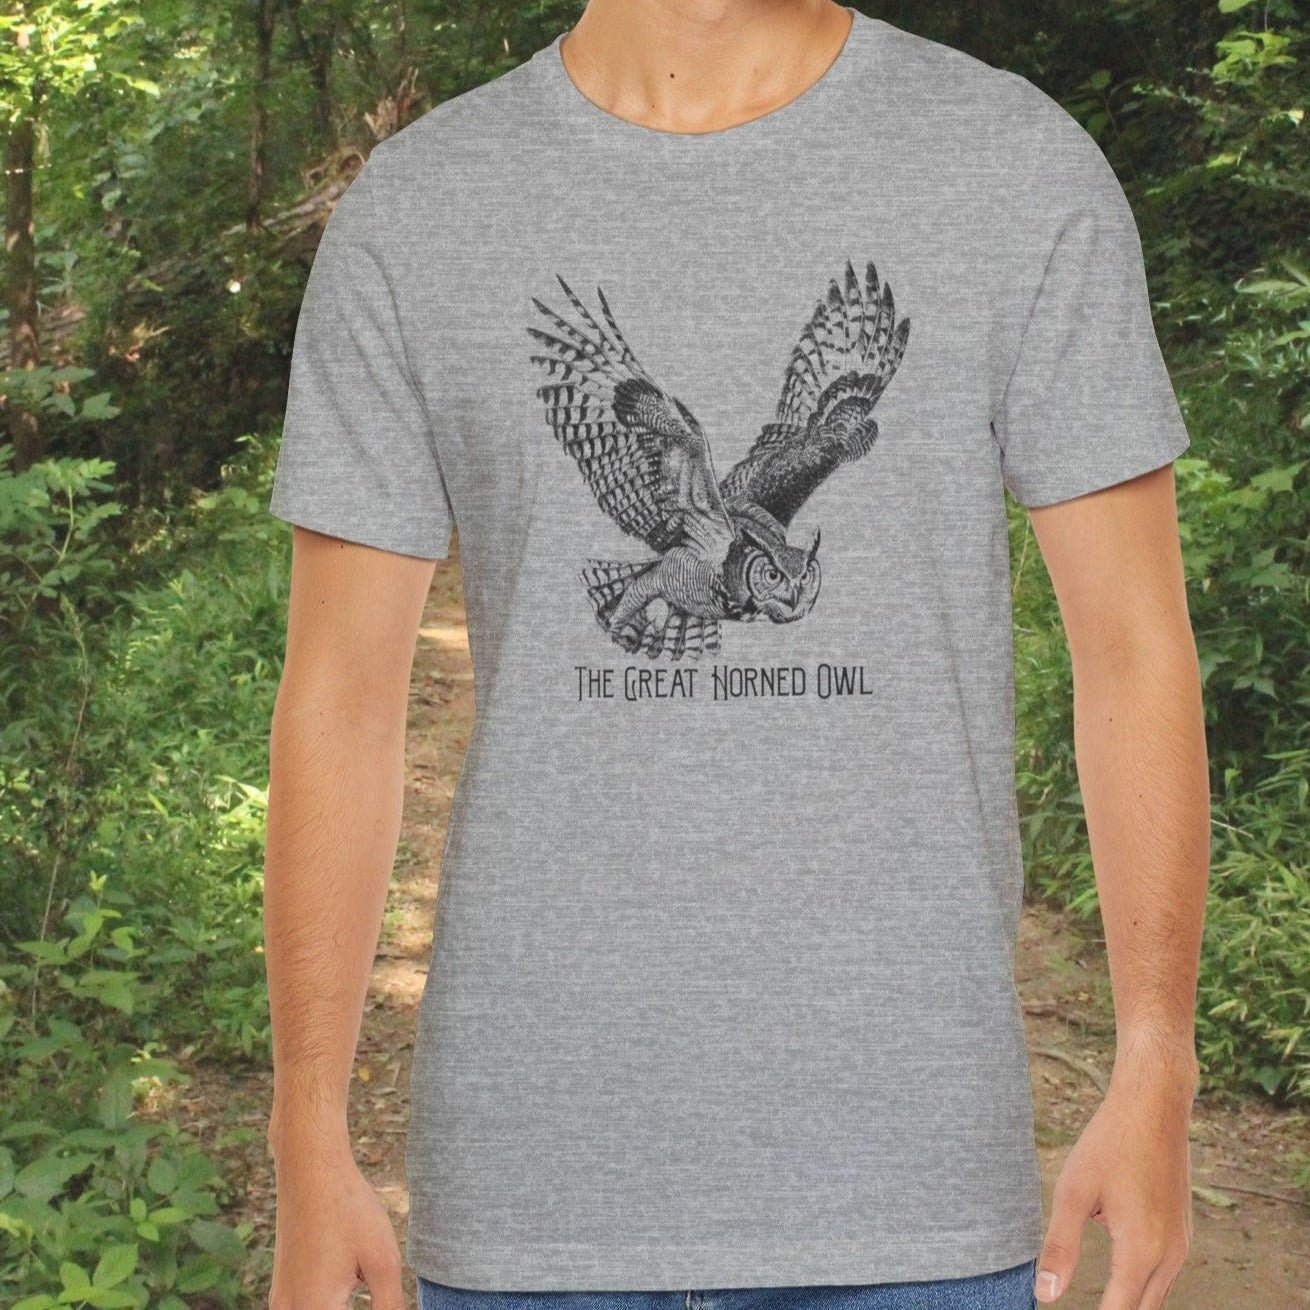 Bird Wildlife Tshirt, The Great Horned Owl Artwork on Tee, Protect National Parks - FlooredByArt